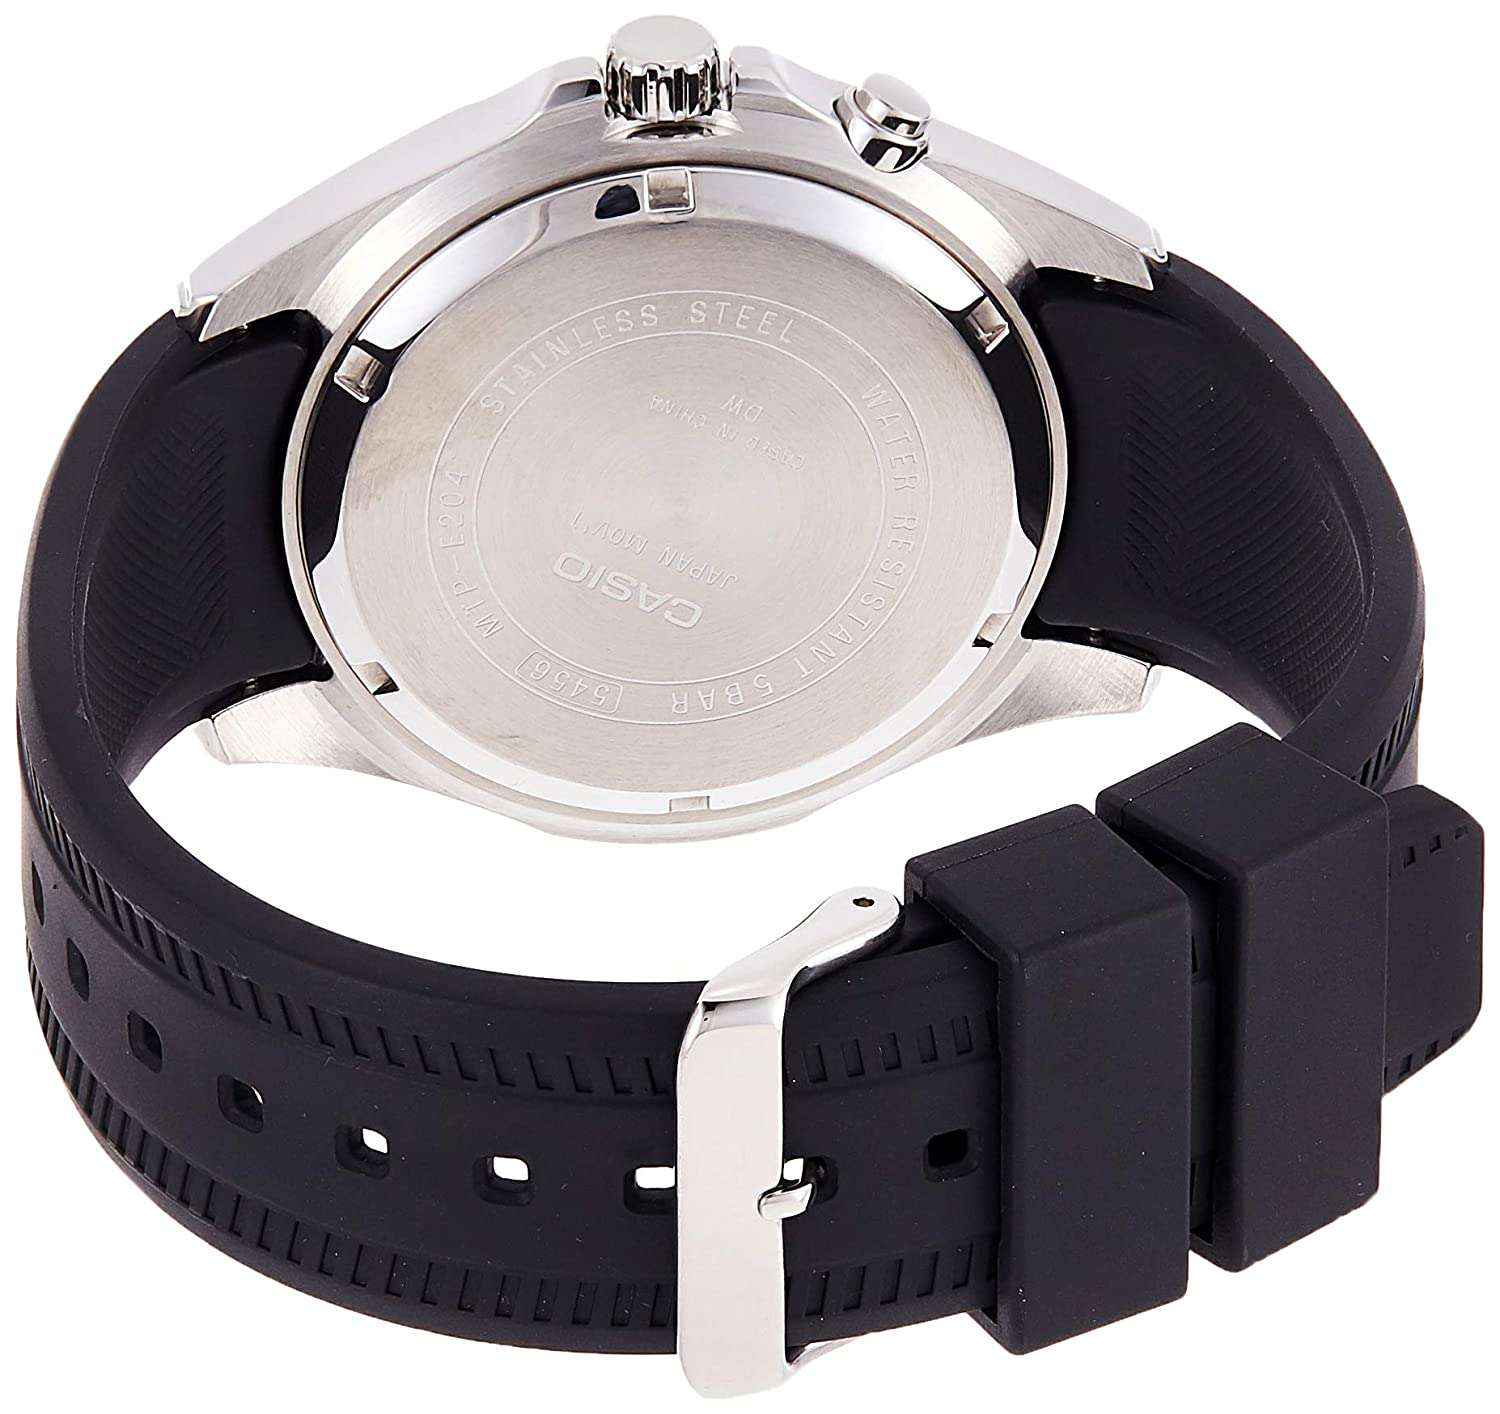 Casio MTP-E204-1A Super Illuminator Resin Strap Watch-Watch Portal Philippines